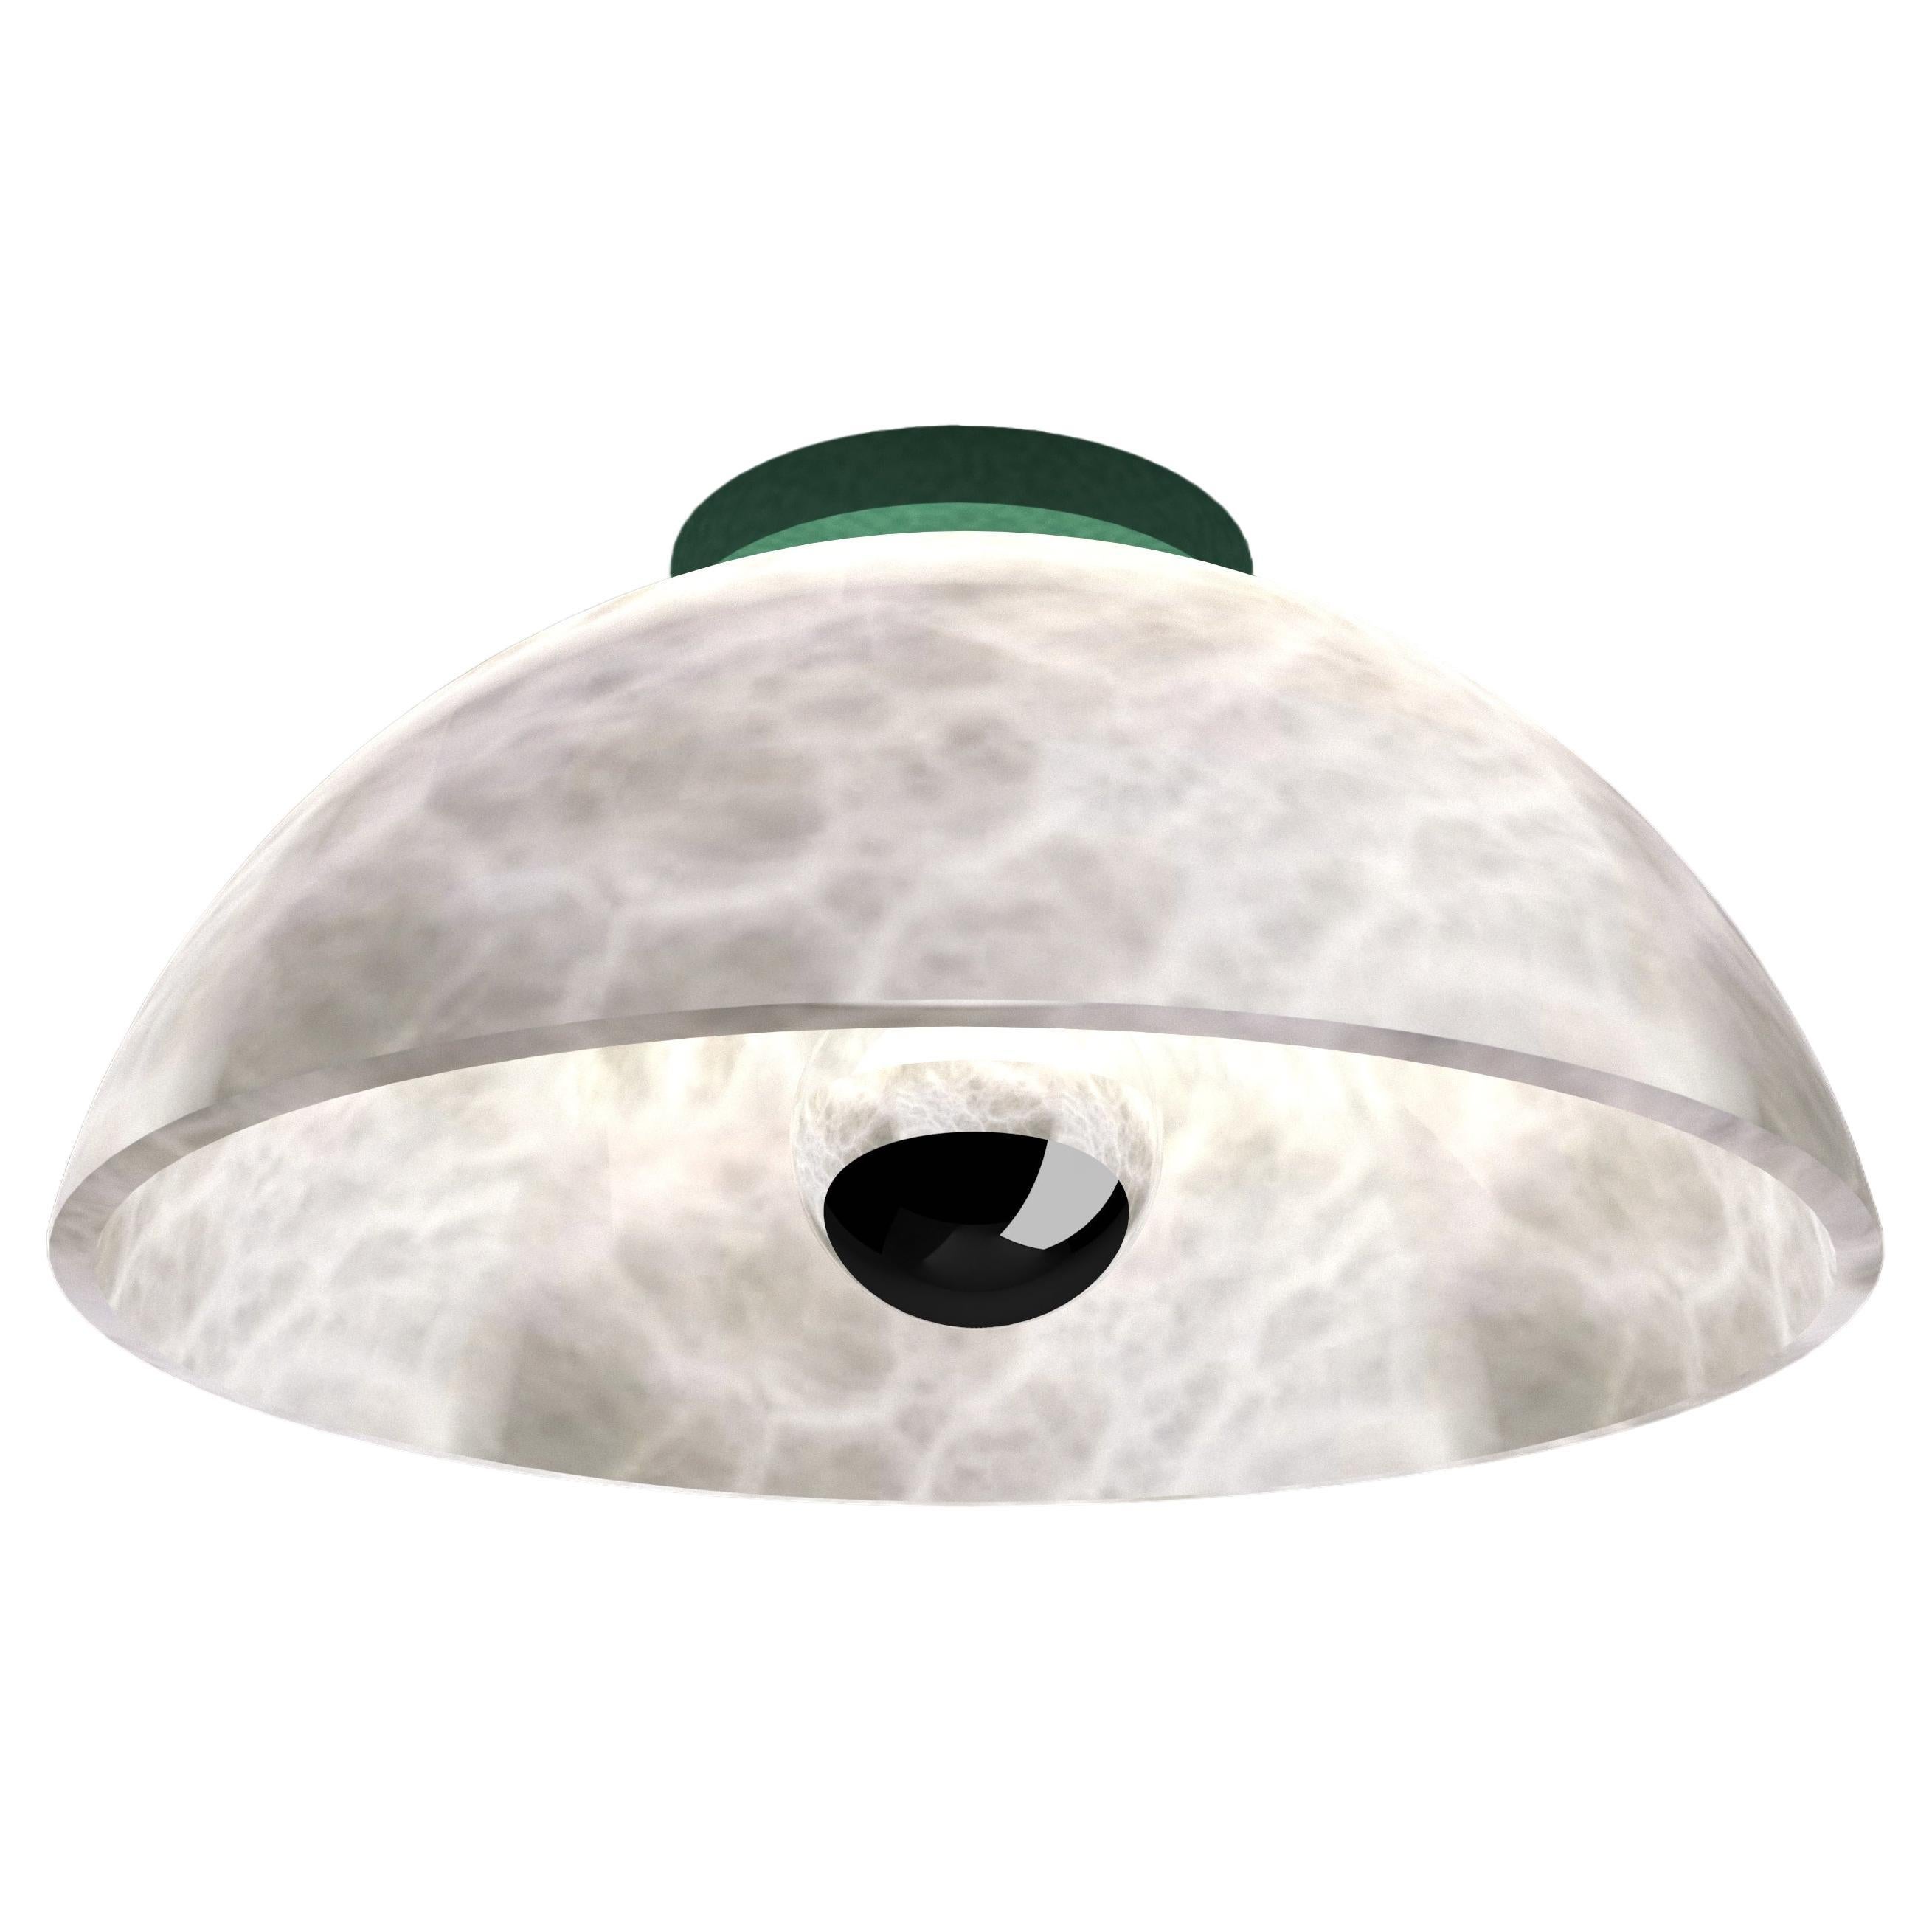 Apollo Freedom Green Metal Ceiling Lamp by Alabastro Italiano